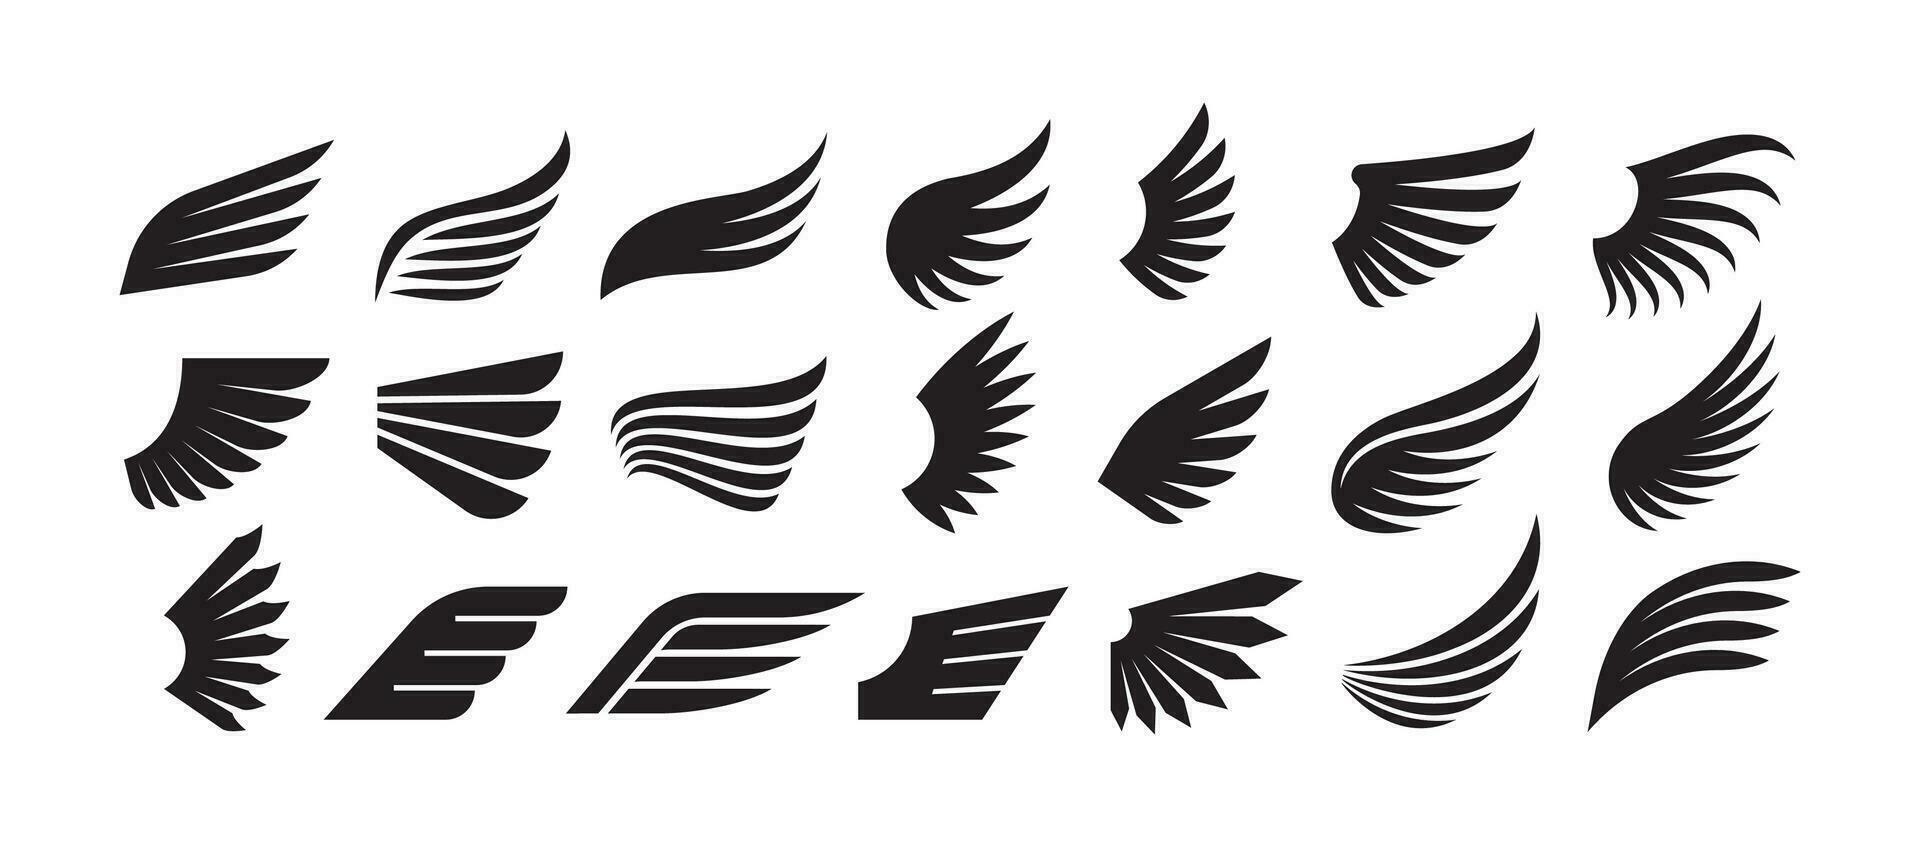 alas logo. ala silueta insignias, ángel con alas emblemas águila, aviación simbolos Clásico tatuaje, libertad gráficos vector conjunto